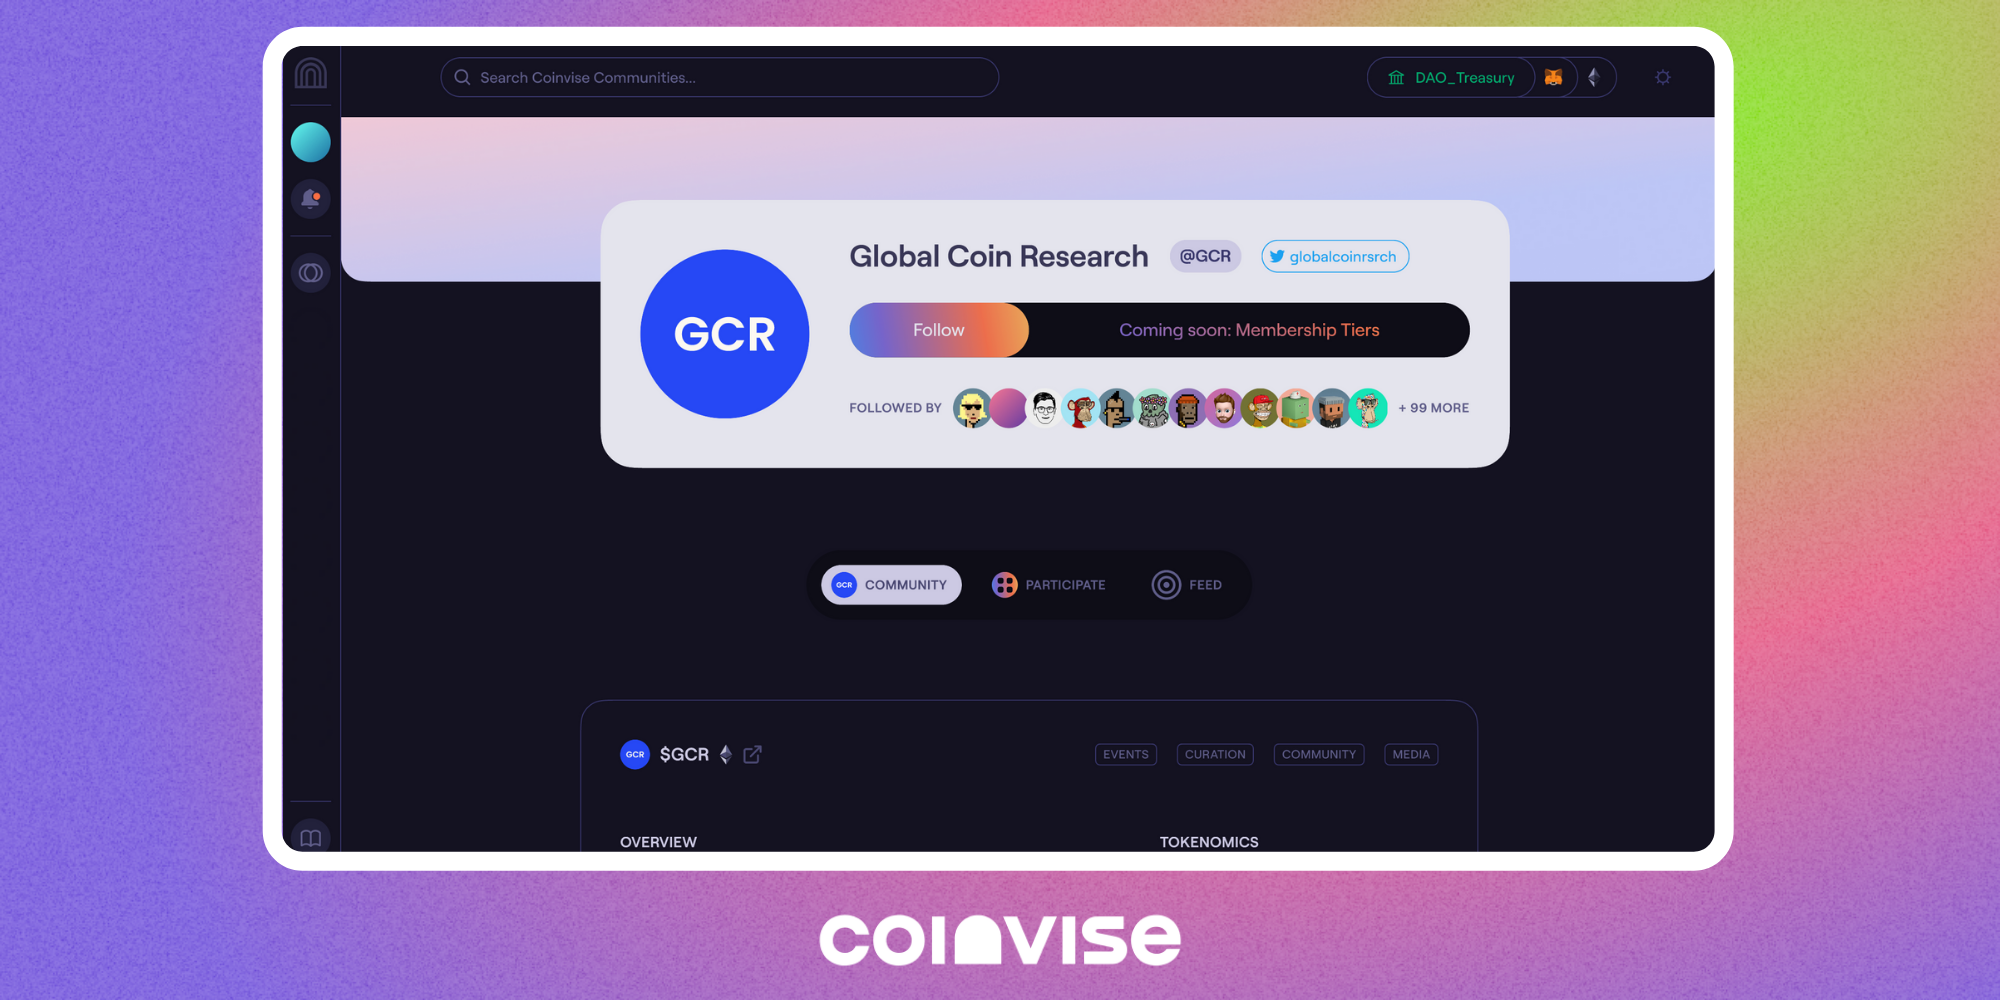 Coinvise's Profile - Community Tab